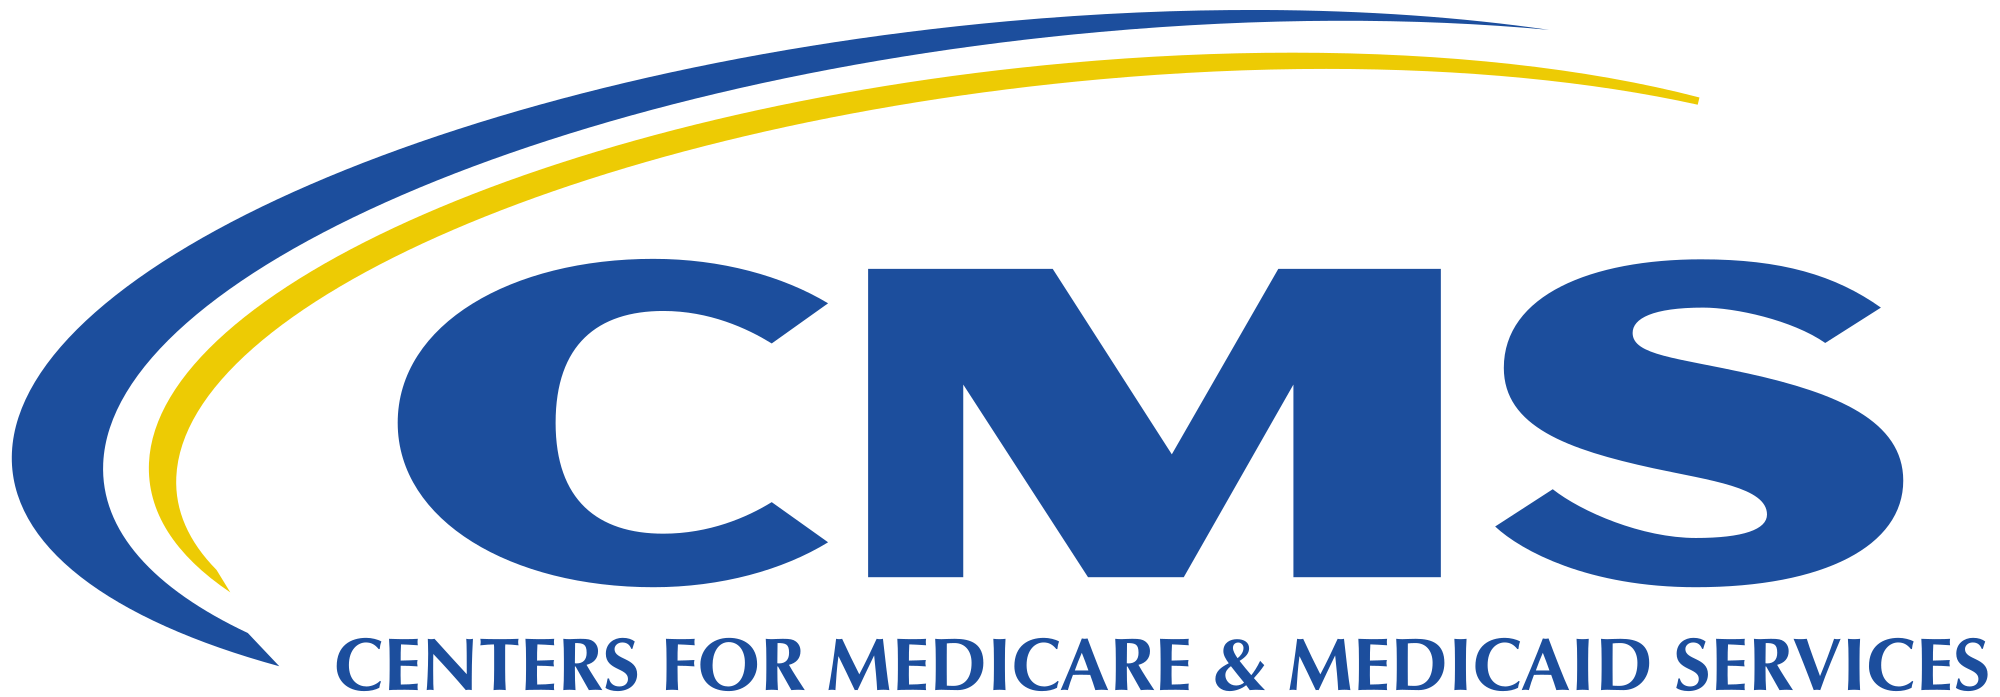 Medicare Logo - Centers for Medicare and Medicaid Services logo.svg